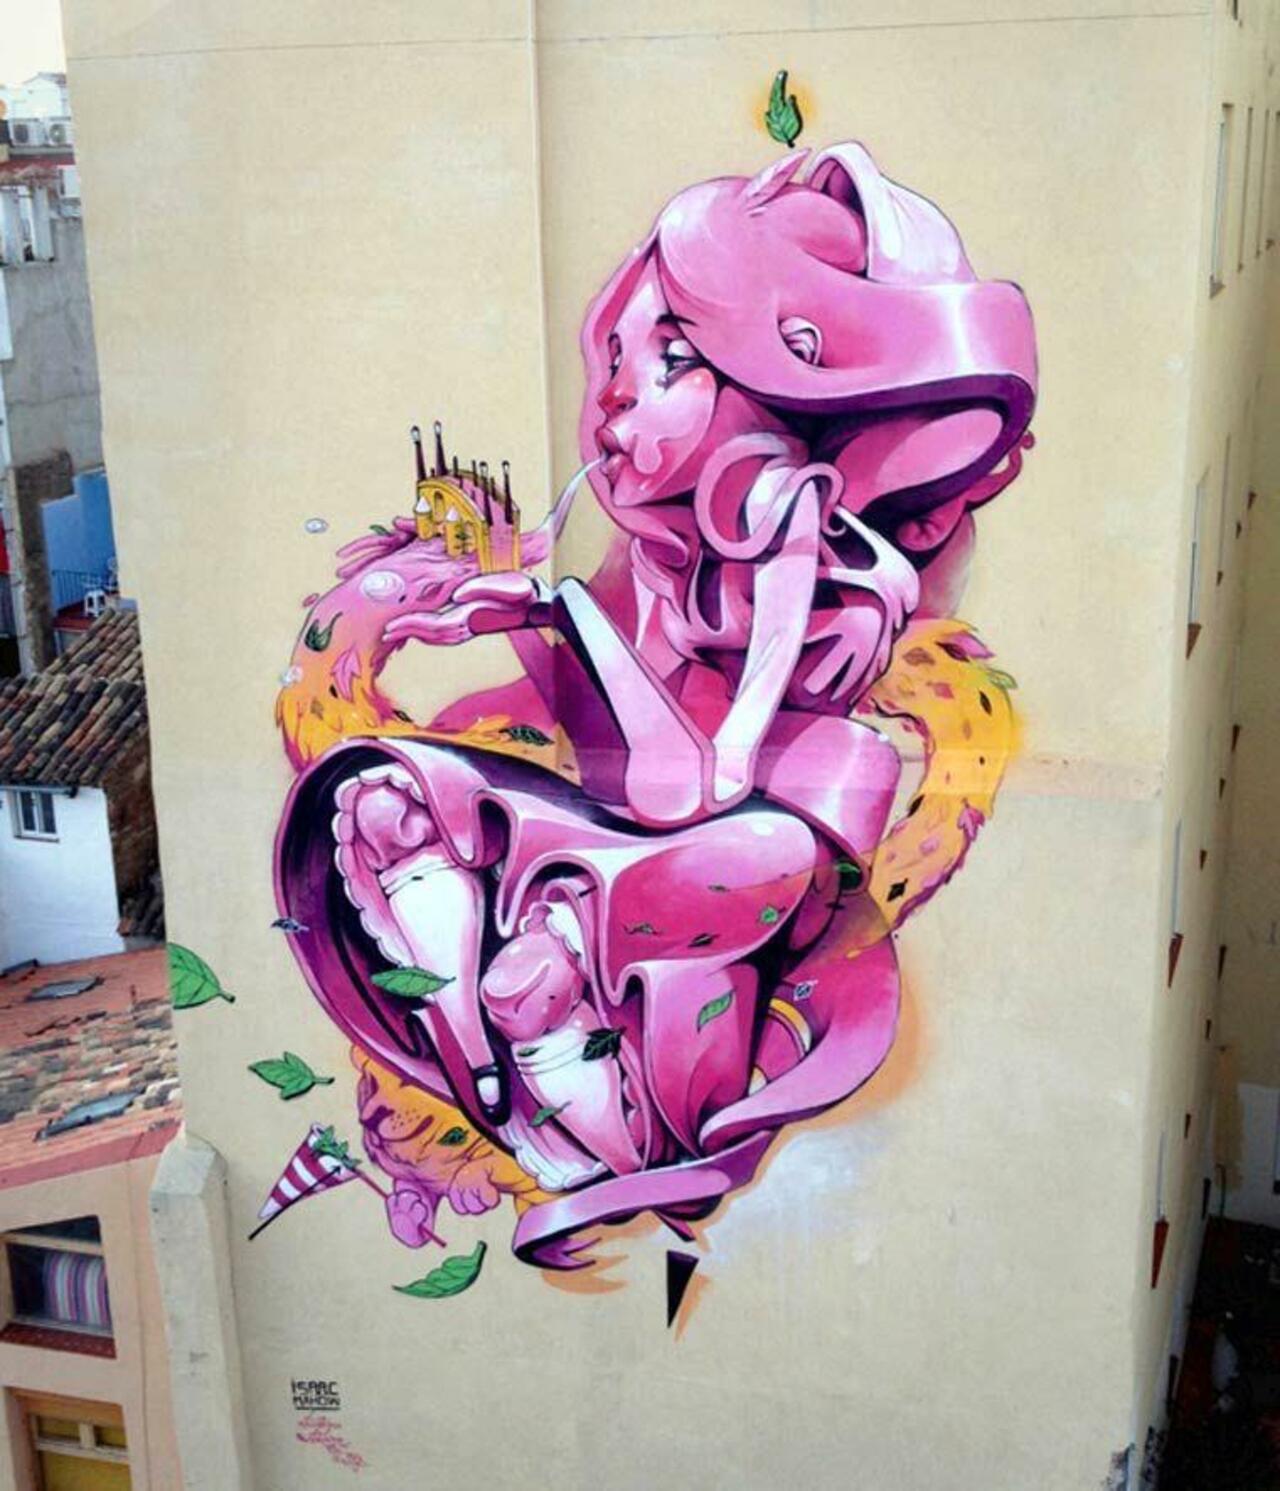 RT @wonnil: Check this out: Fresh #Graffiti #StreetArt #Mural http://t.co/J5Gg0jXO2l